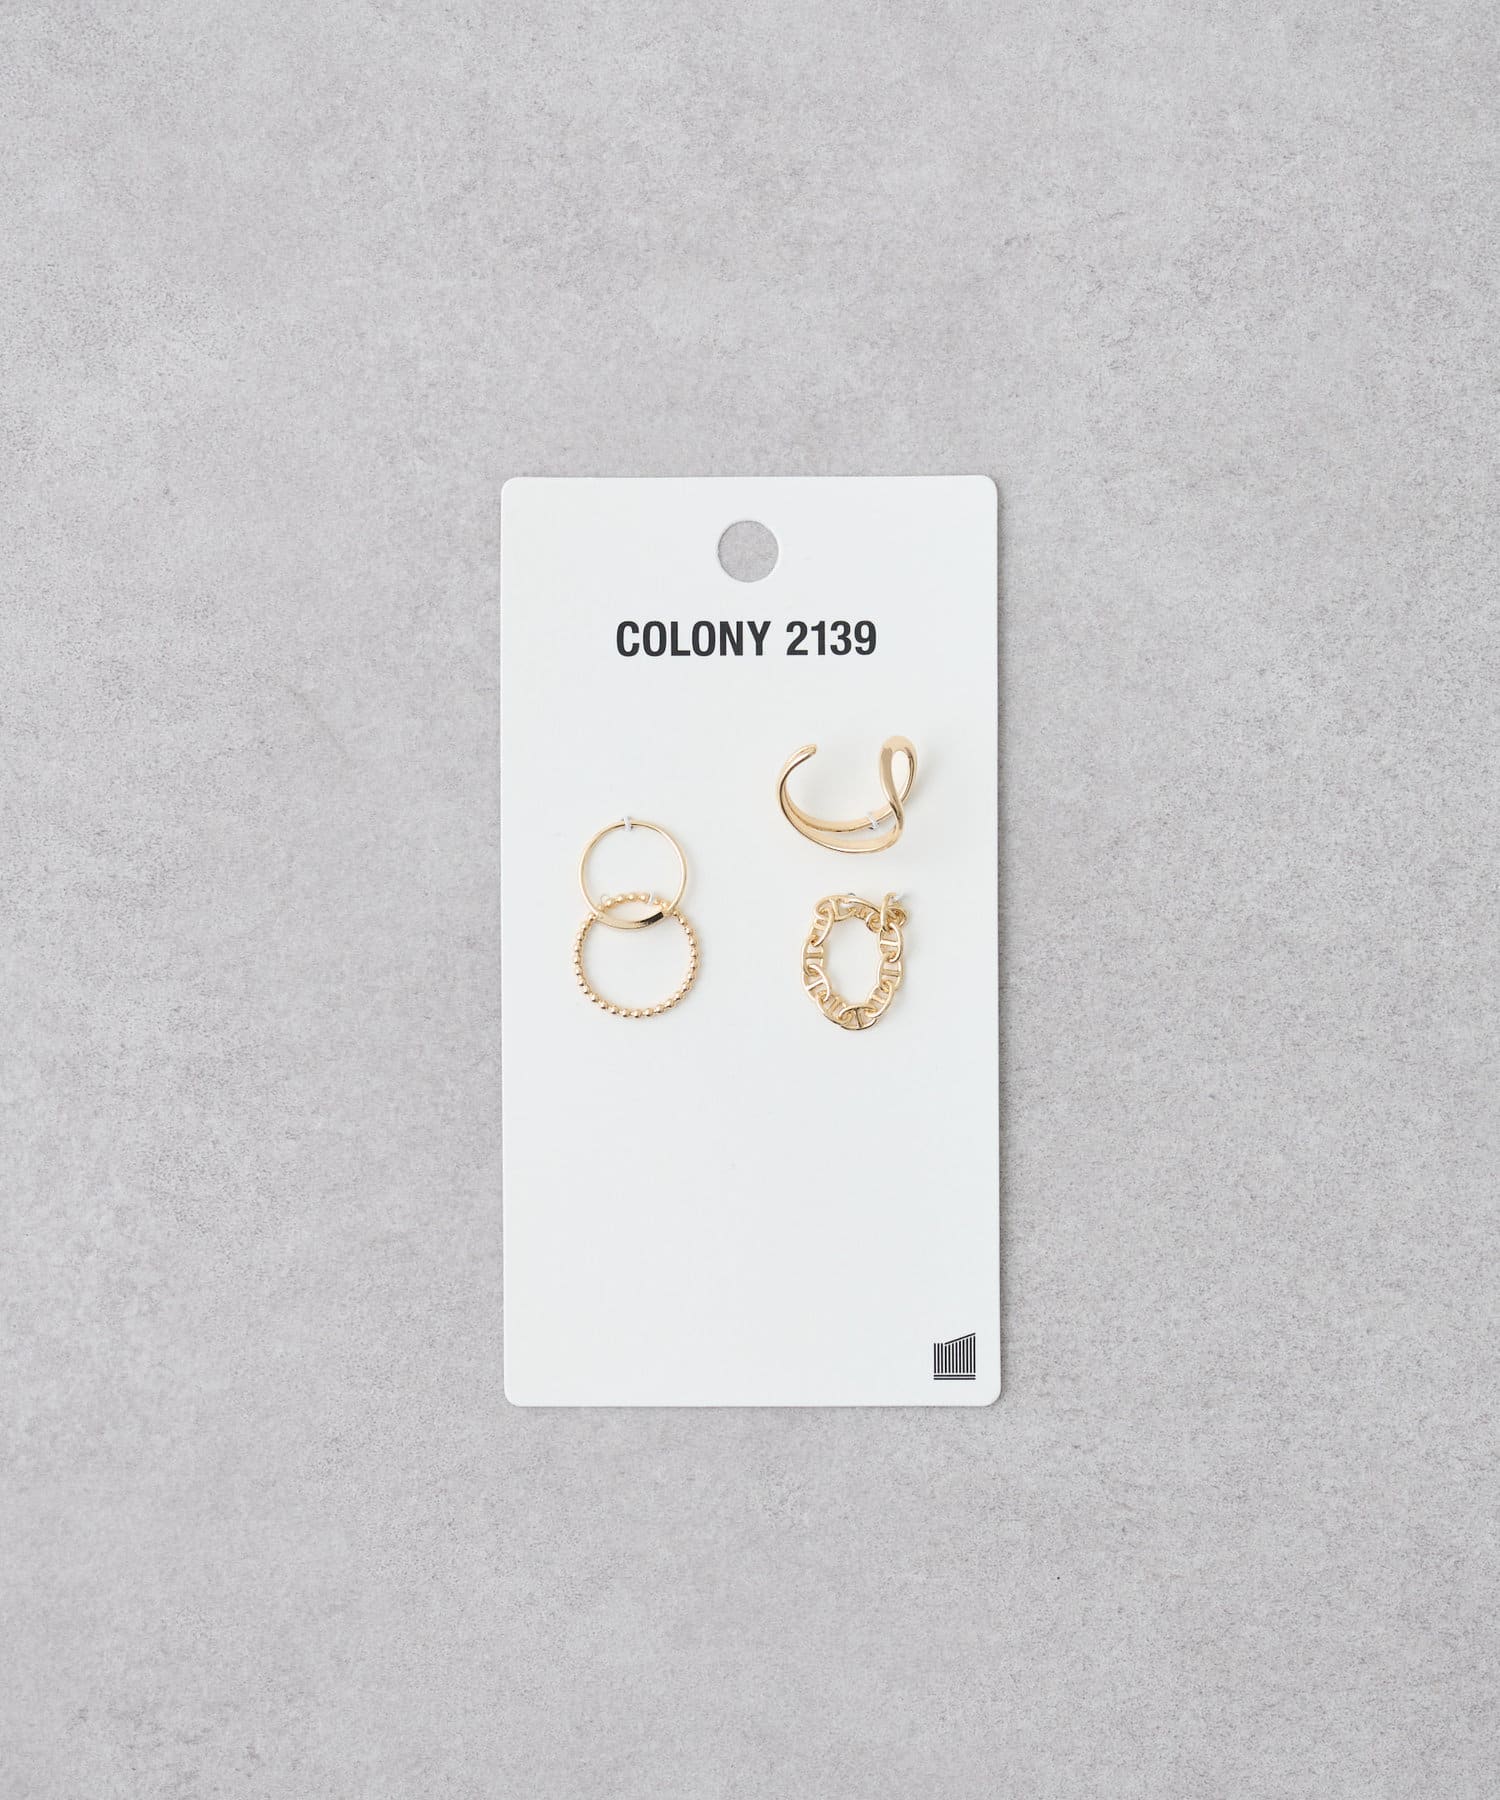 COLONY 2139(コロニー トゥーワンスリーナイン) SETリングA